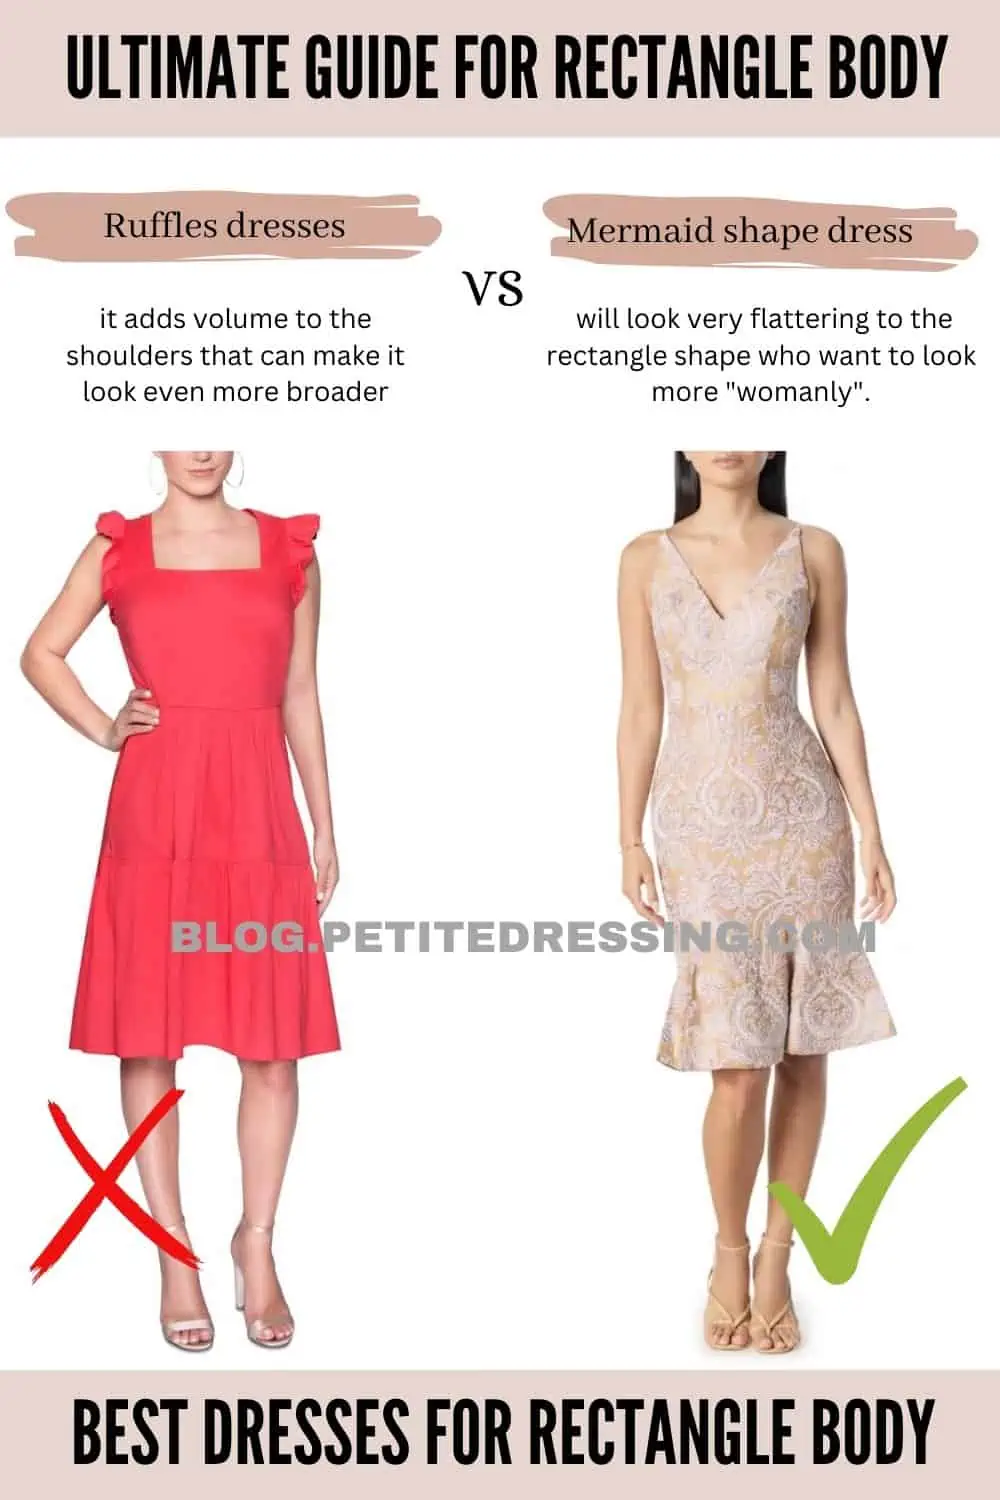 Body Shape Bible: Understanding How to Dress X Shape Bodies